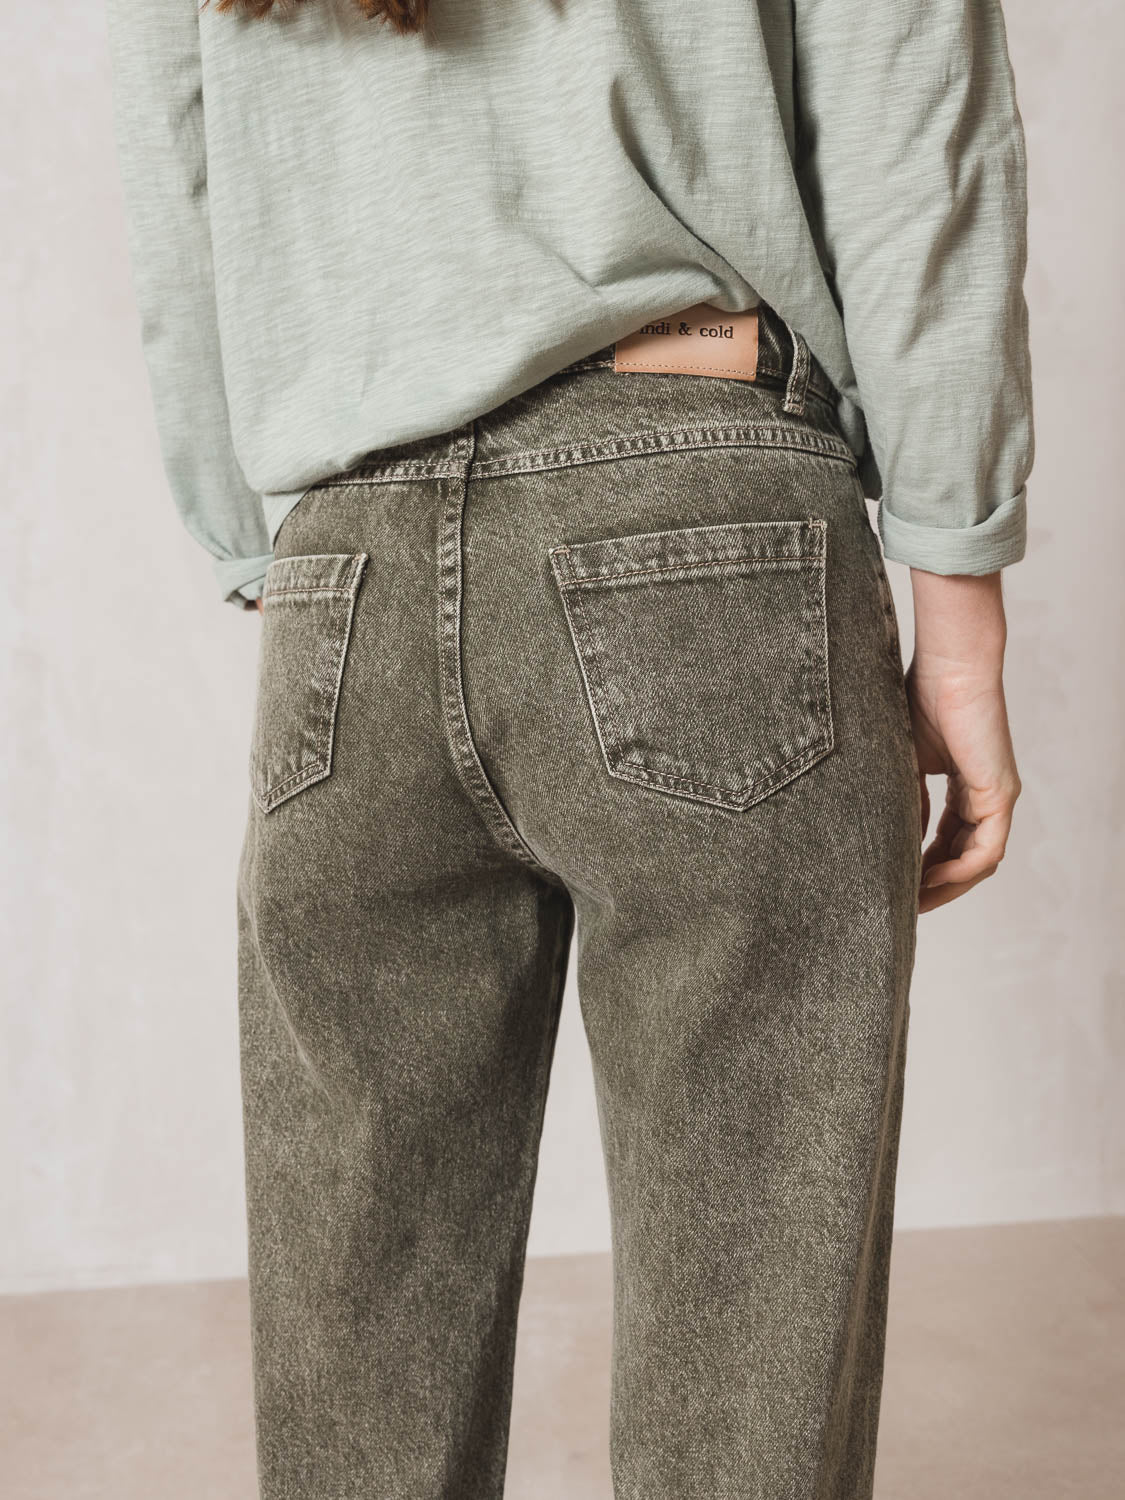 Indi + Cold Washed Effect Jeans Khaki